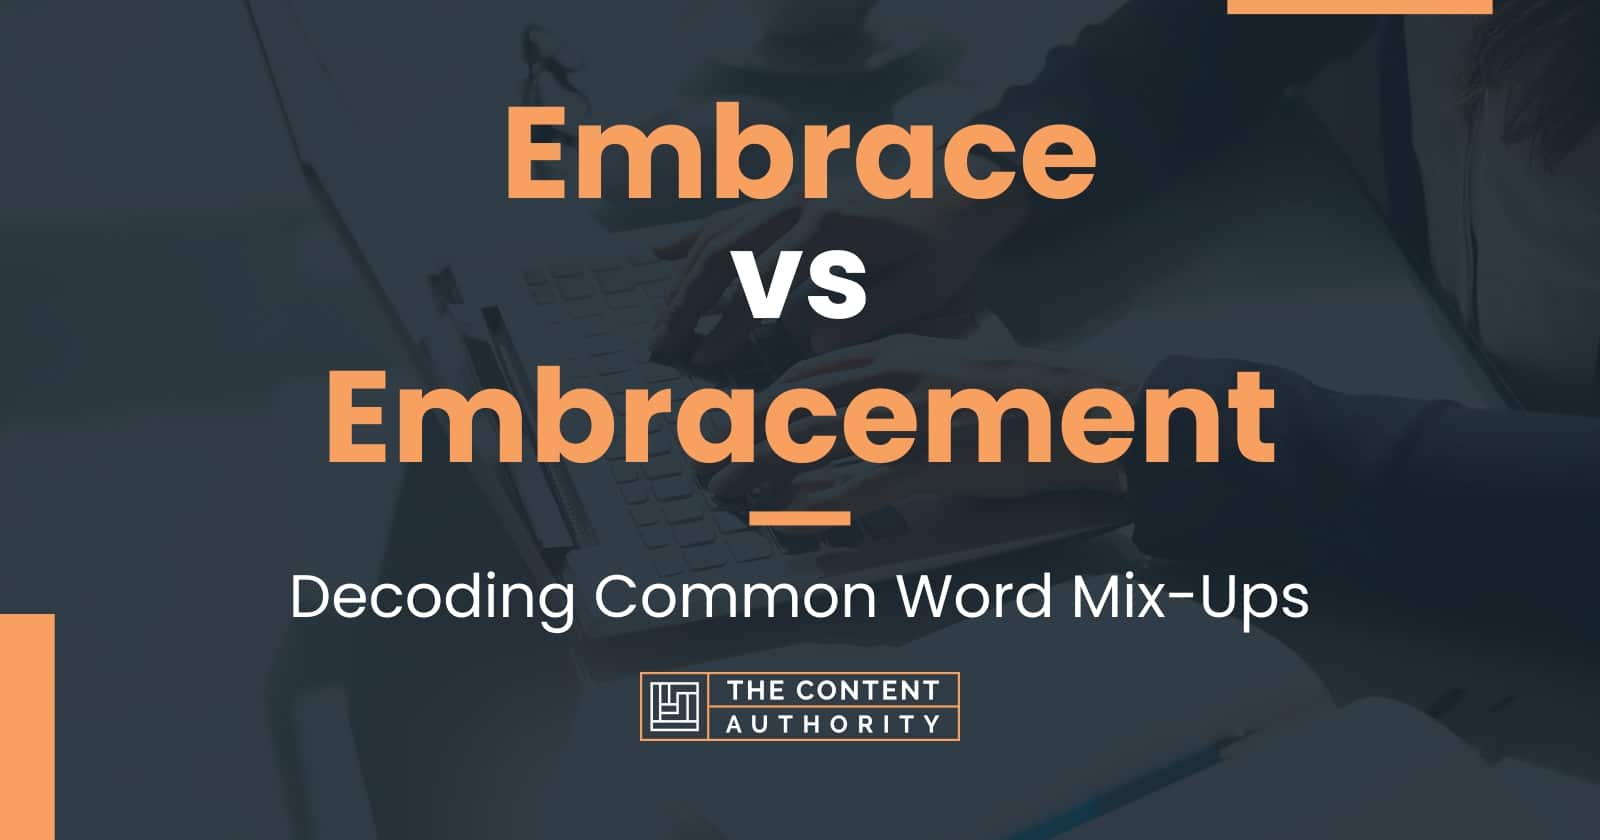 Embrace vs Embracement: Decoding Common Word Mix-Ups